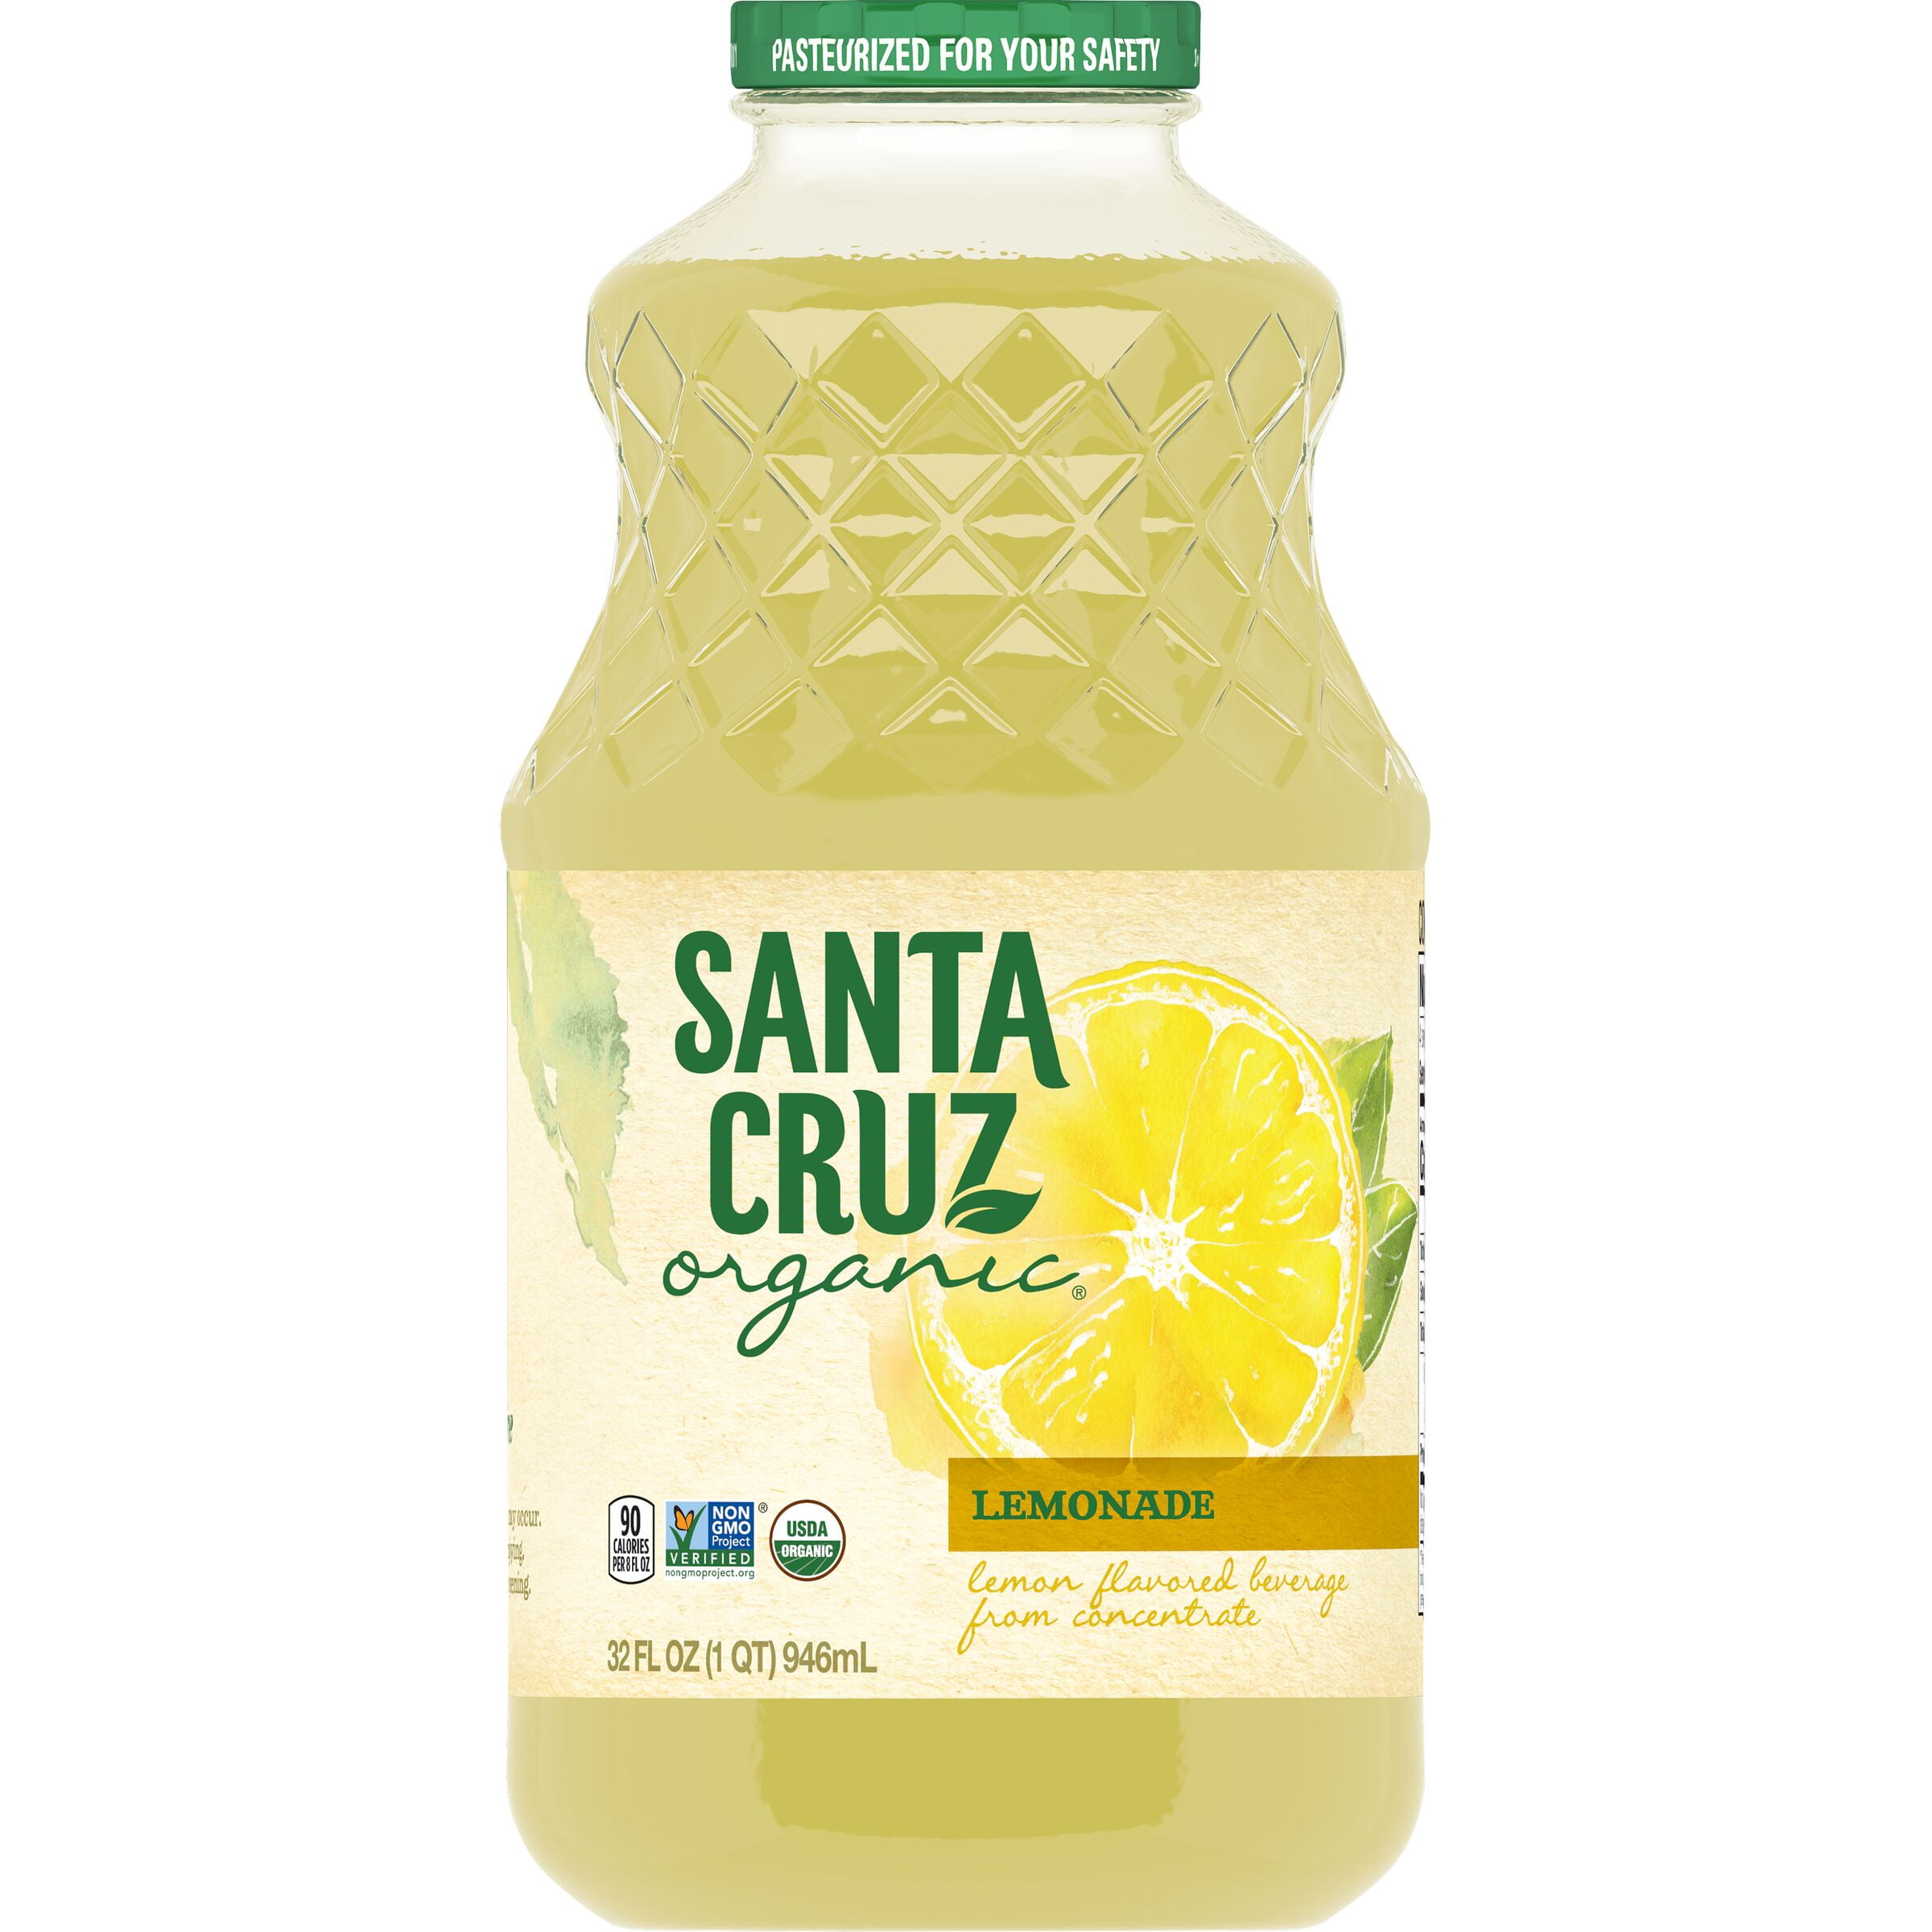 Santa Cruz Organic Lemonade, 32 oz, Glass Bottle